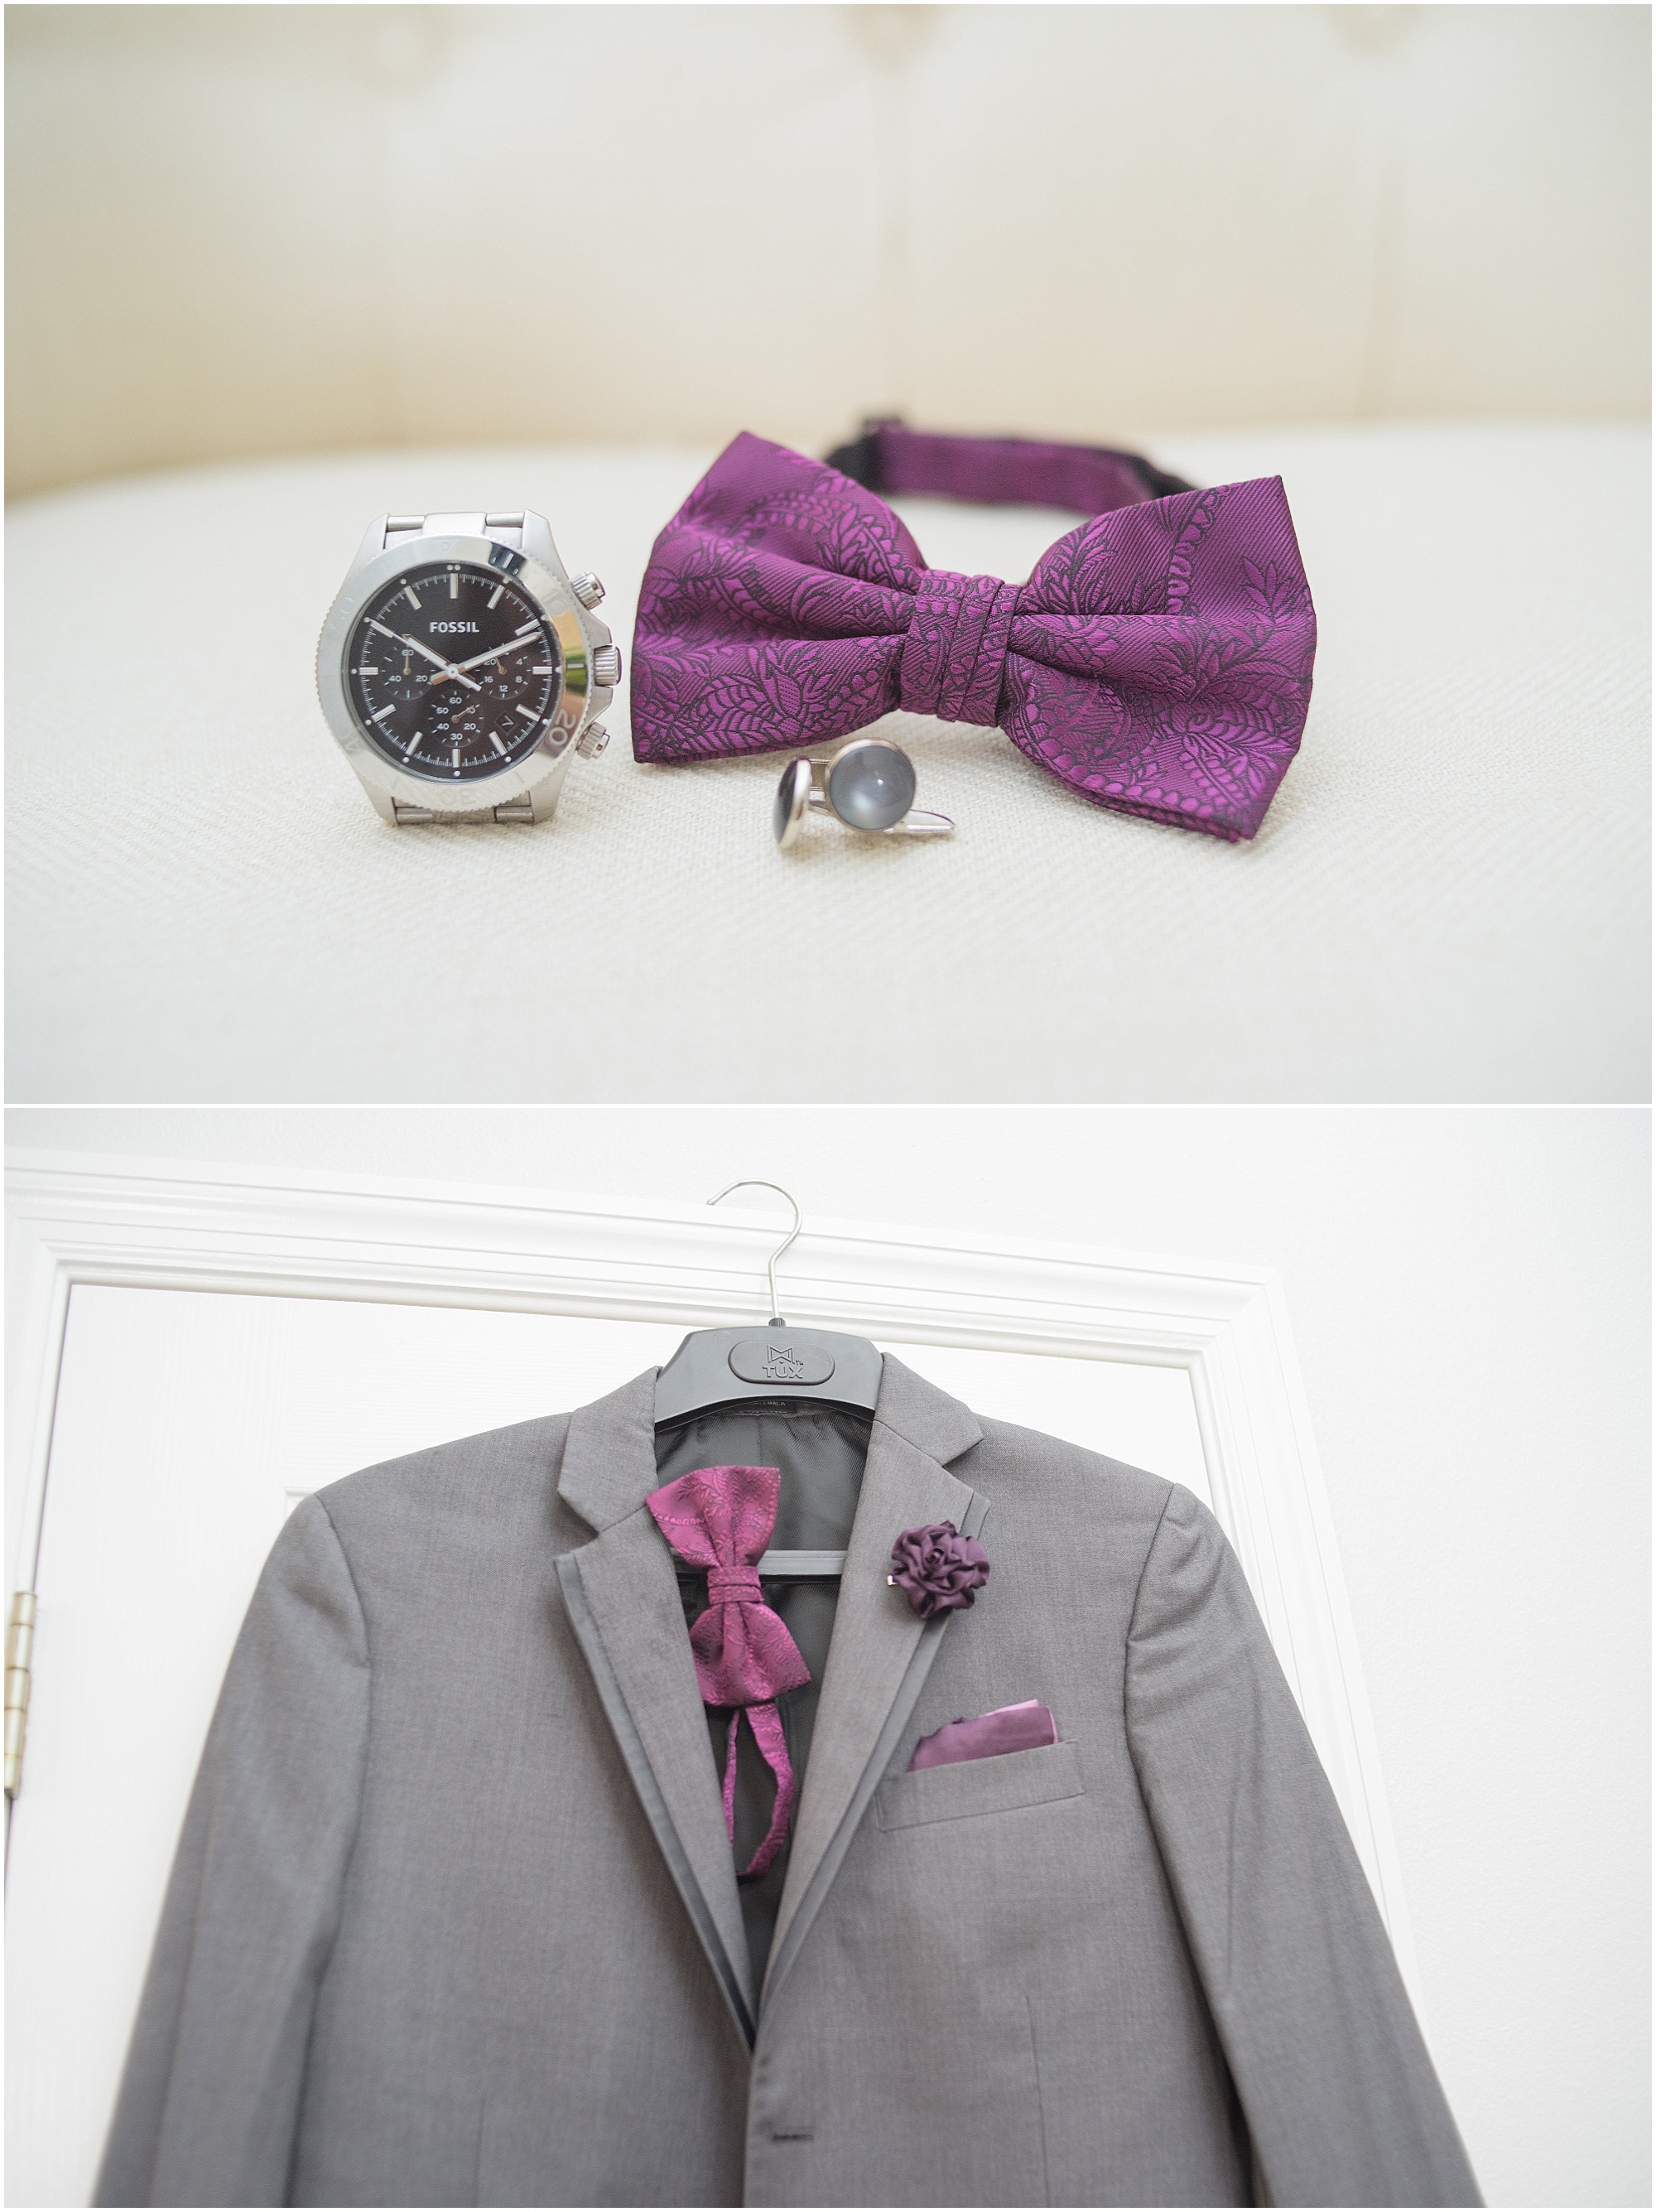 Groom's fuchsia bowtie, watch, cufflinks, and gray suit. 